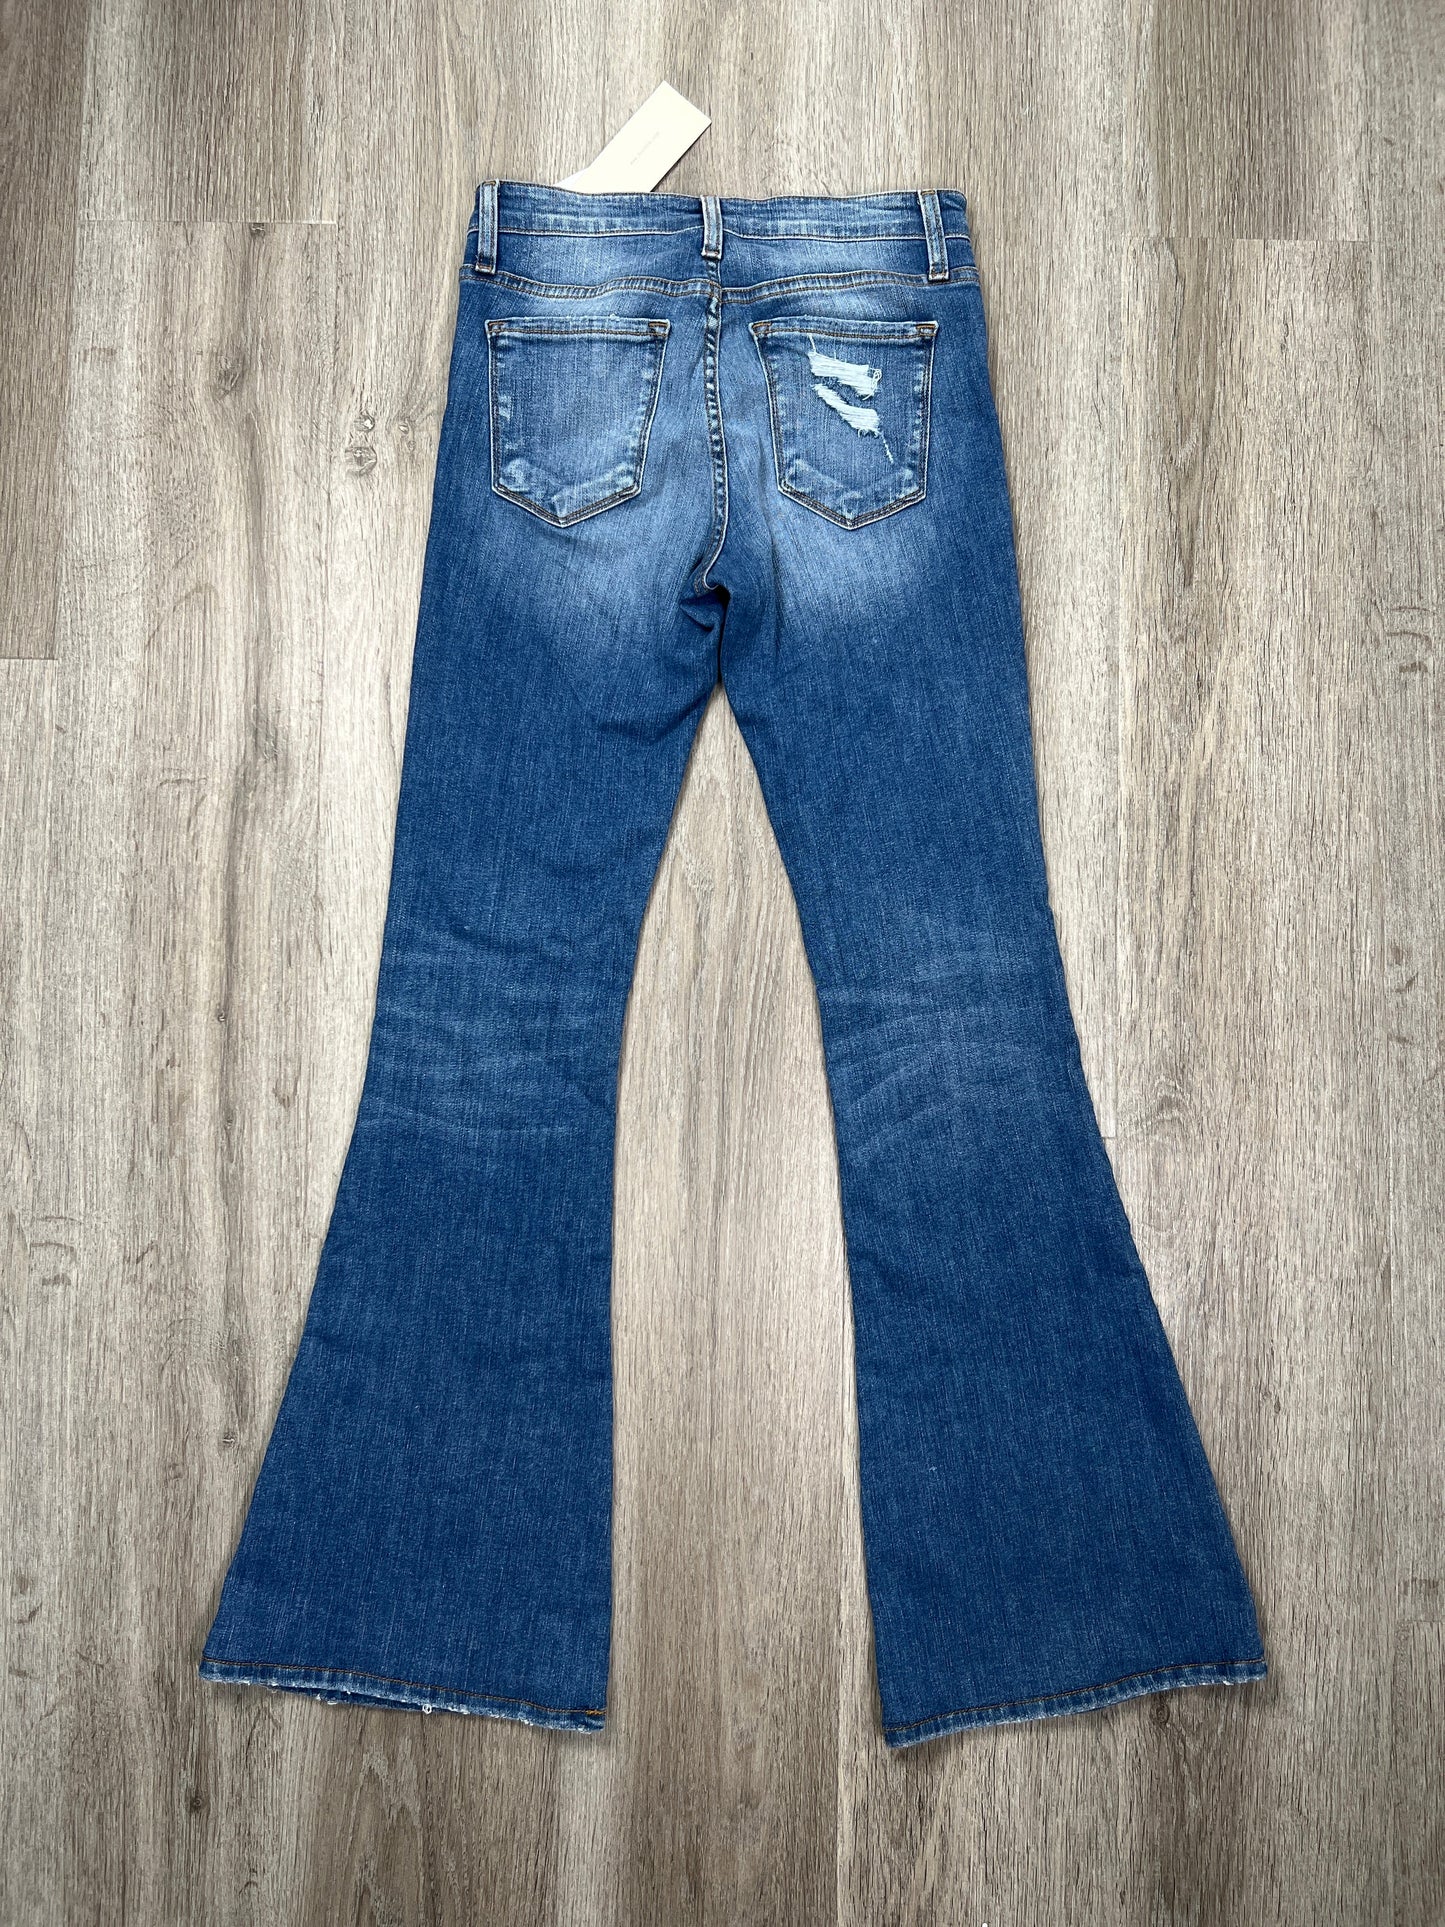 Blue Denim Jeans Flared BRIDGE BY GLY, Size 2